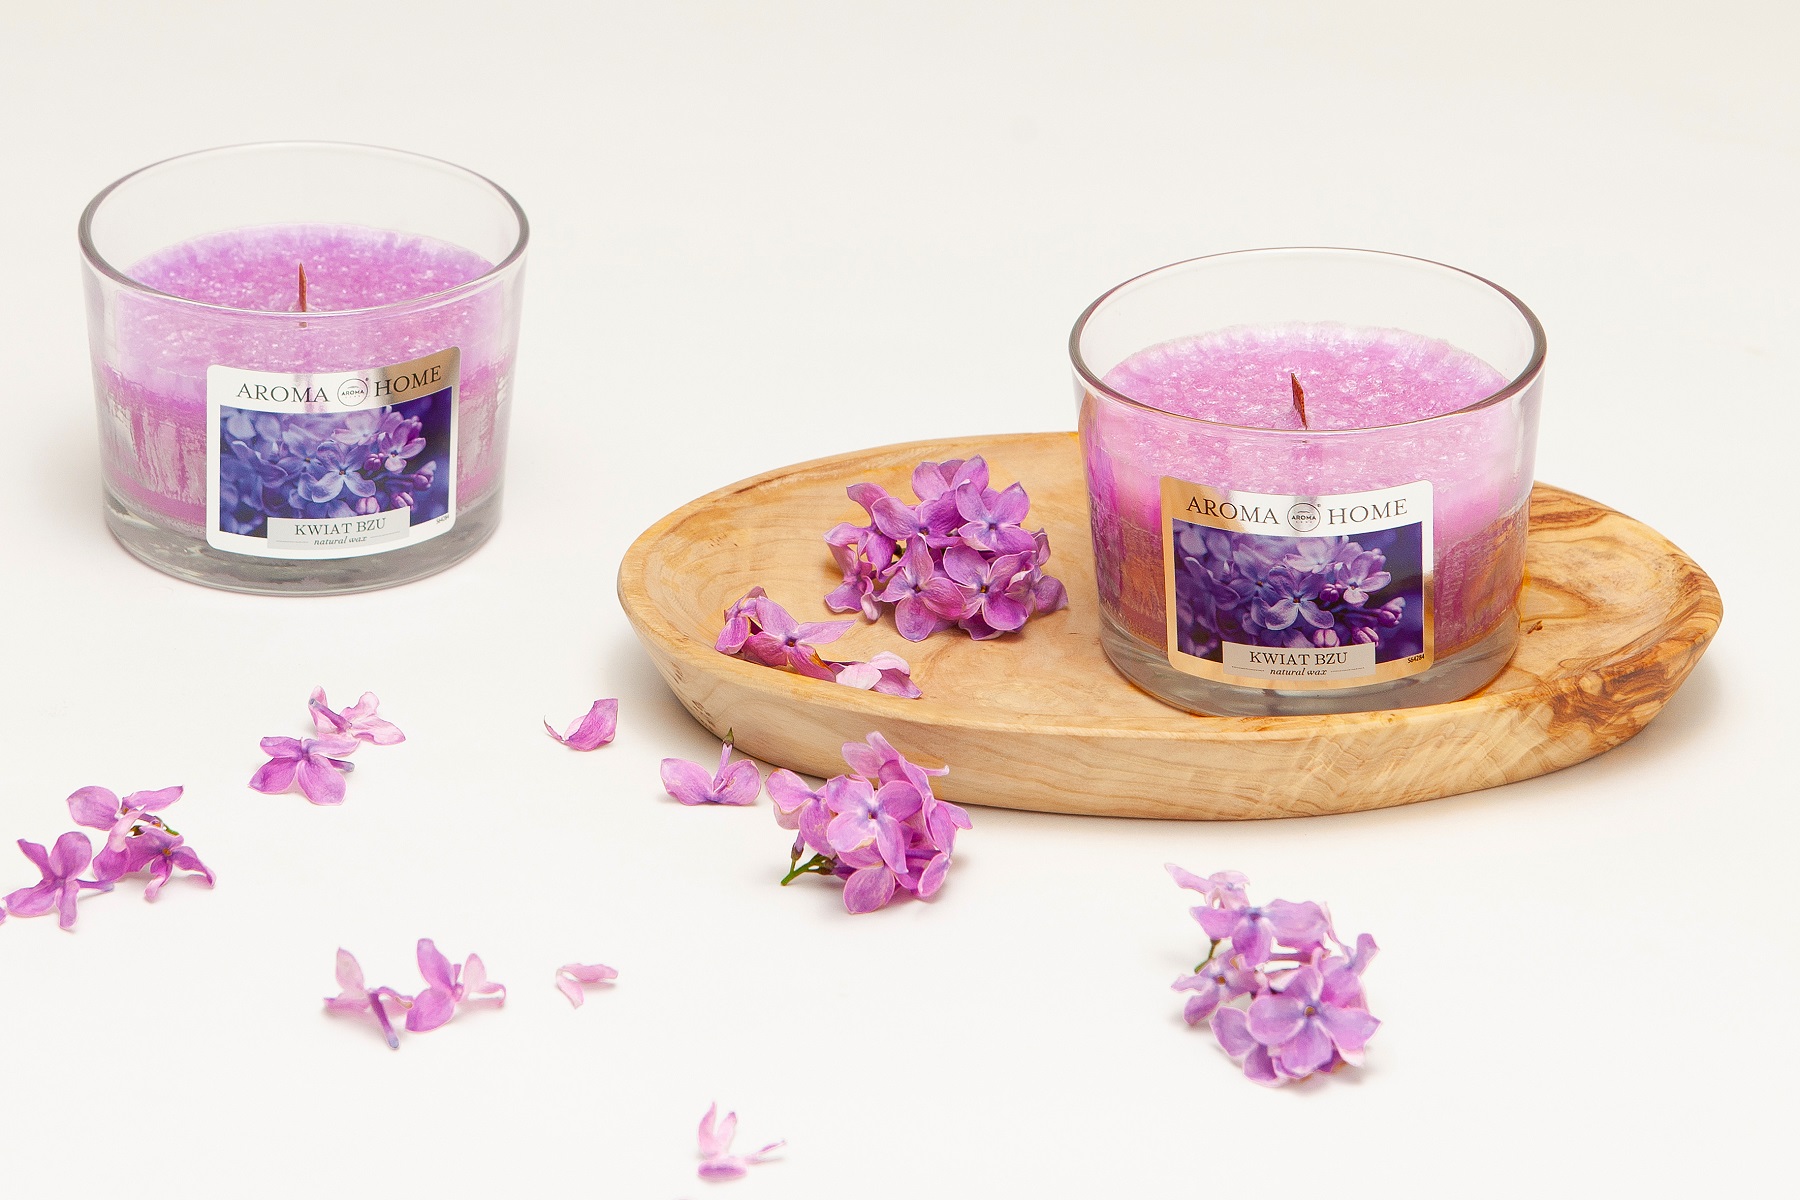 Ароматизированная свеча Aroma Home Lilac Flower цветок сирени 115г